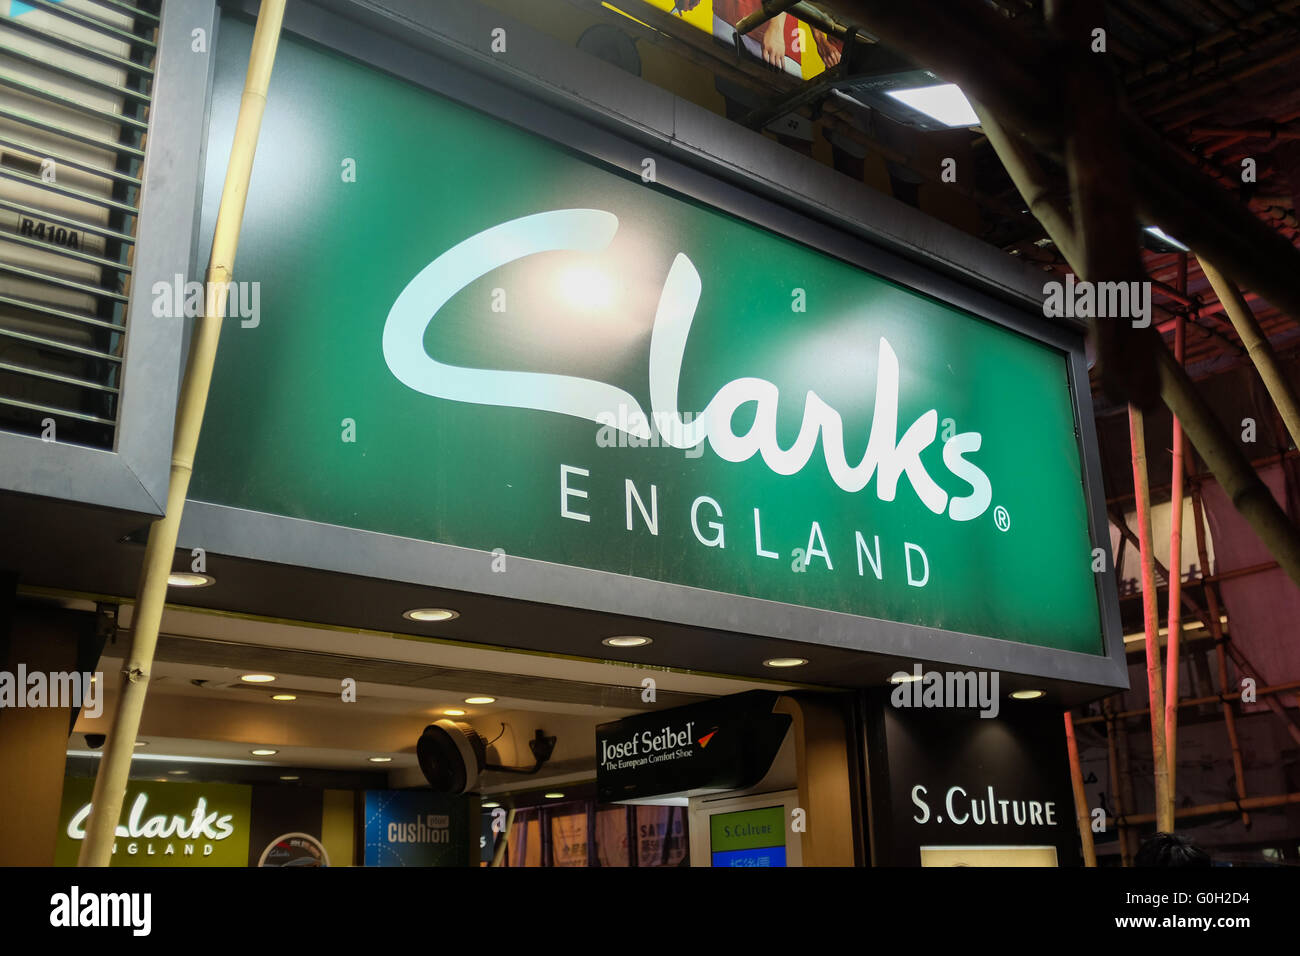 A Clarks shoe store in Hong Kong Stock Photo - Alamy